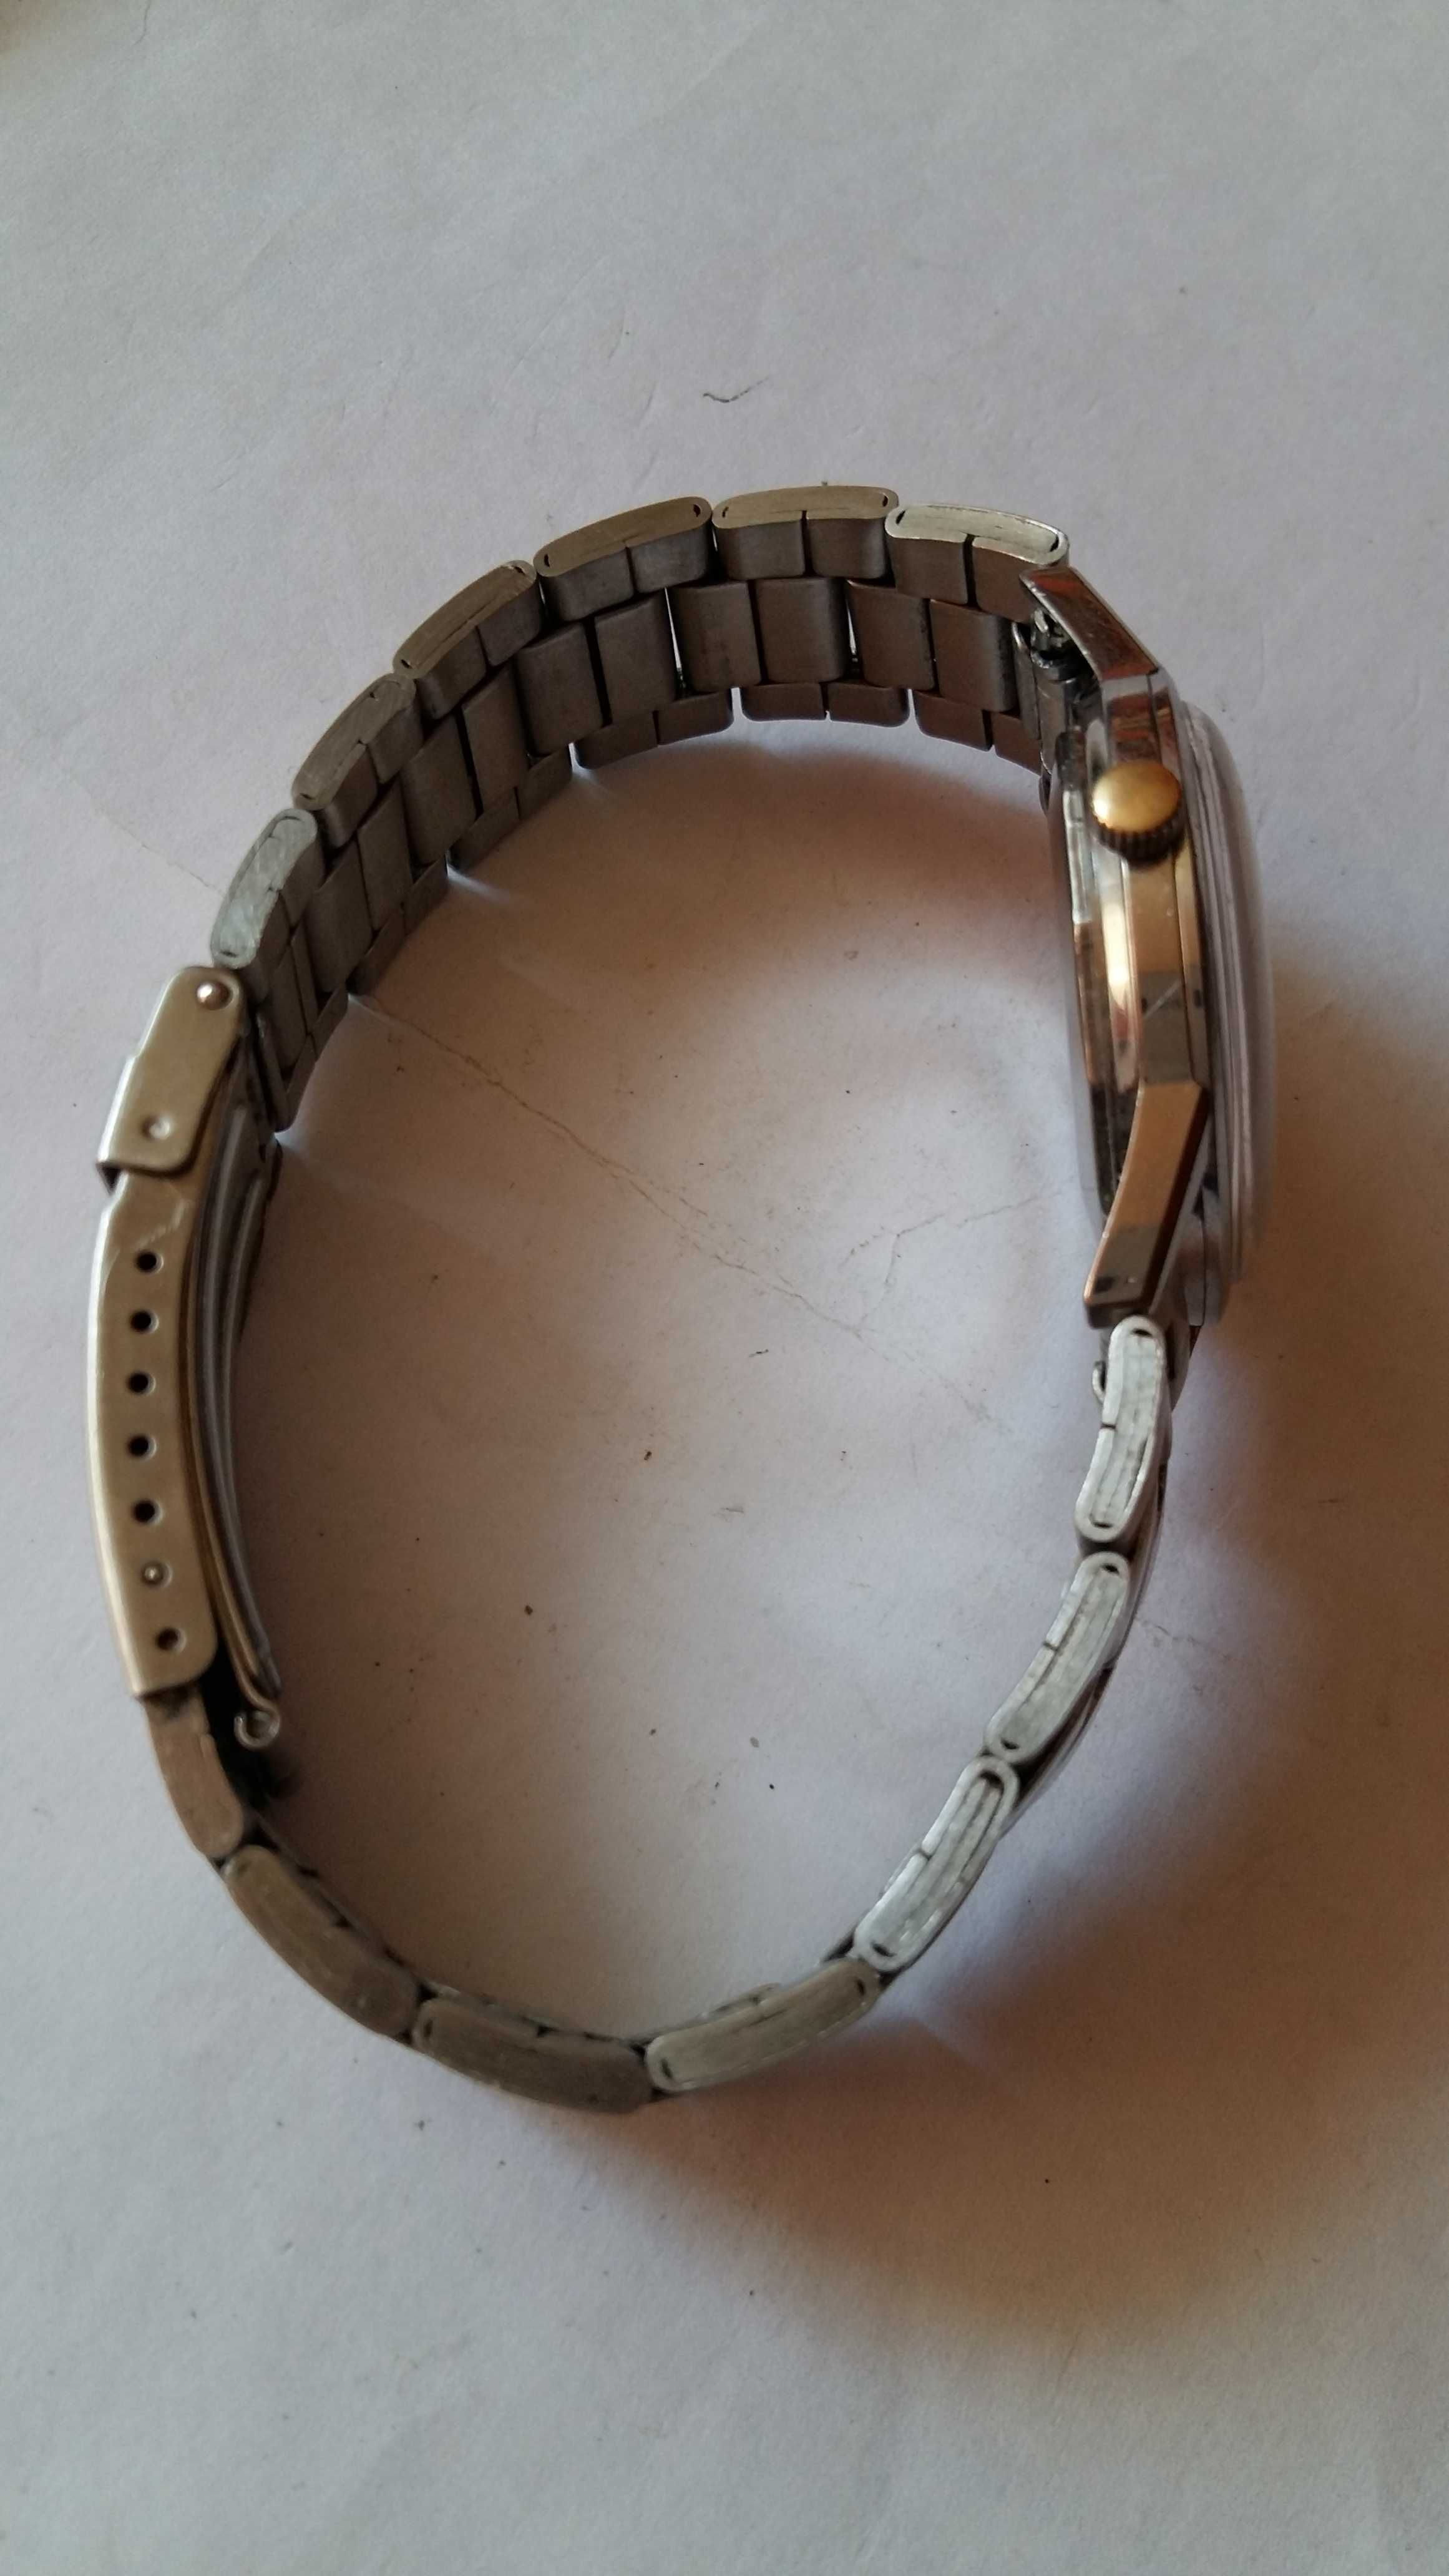 Zegarek AERO-MATIC Watch Swiss 25 jewels stal nie srebro.